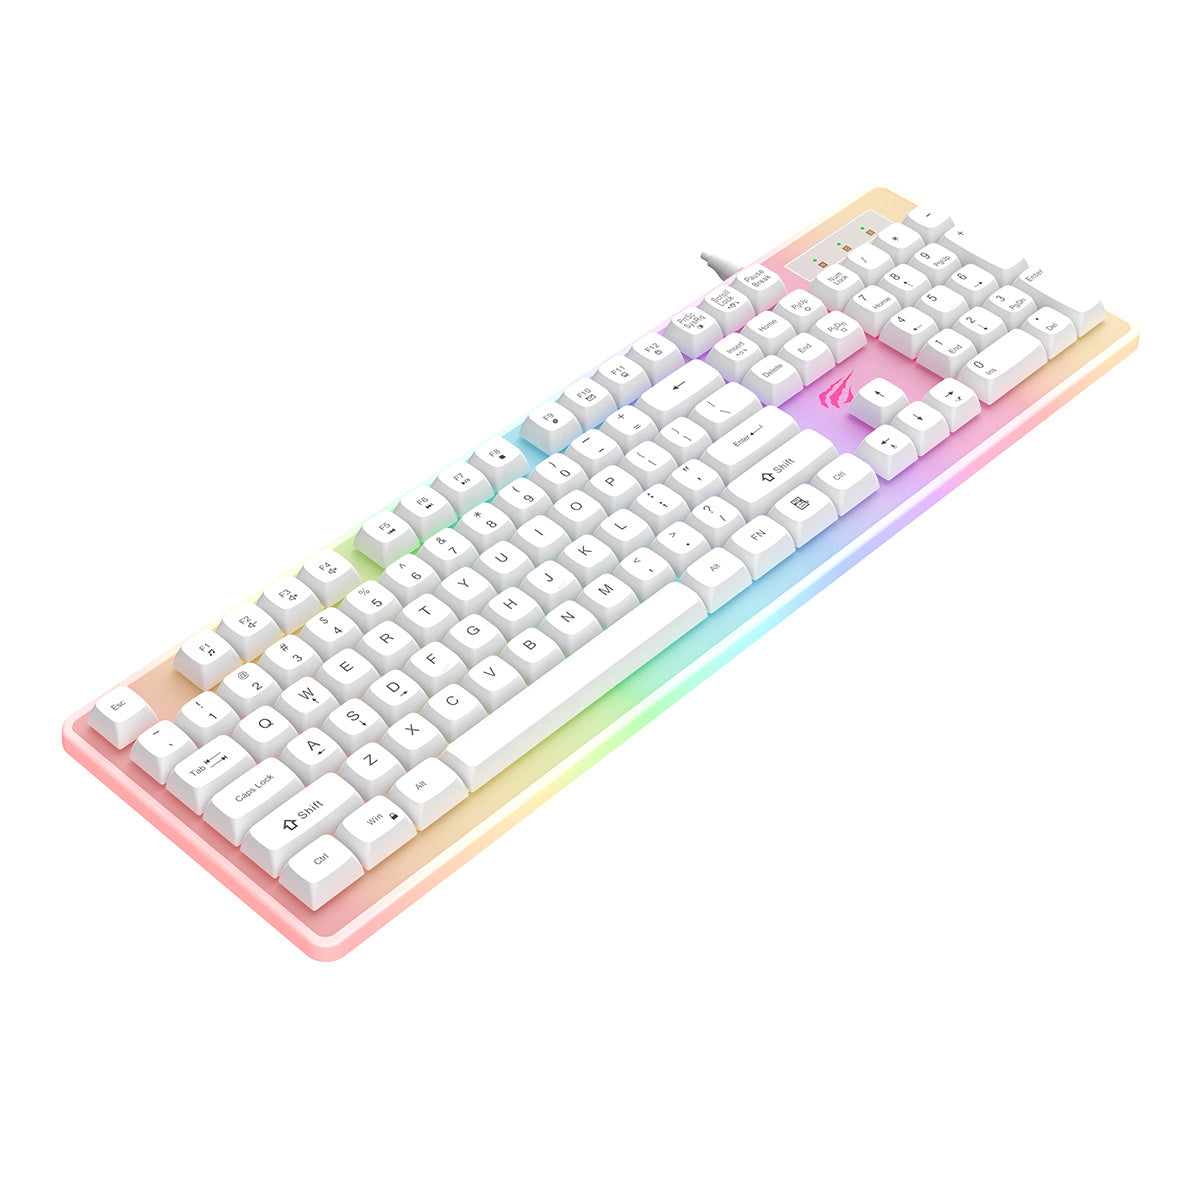 HAVIT KB876L RGB Multi-Function Backlit Keyboard